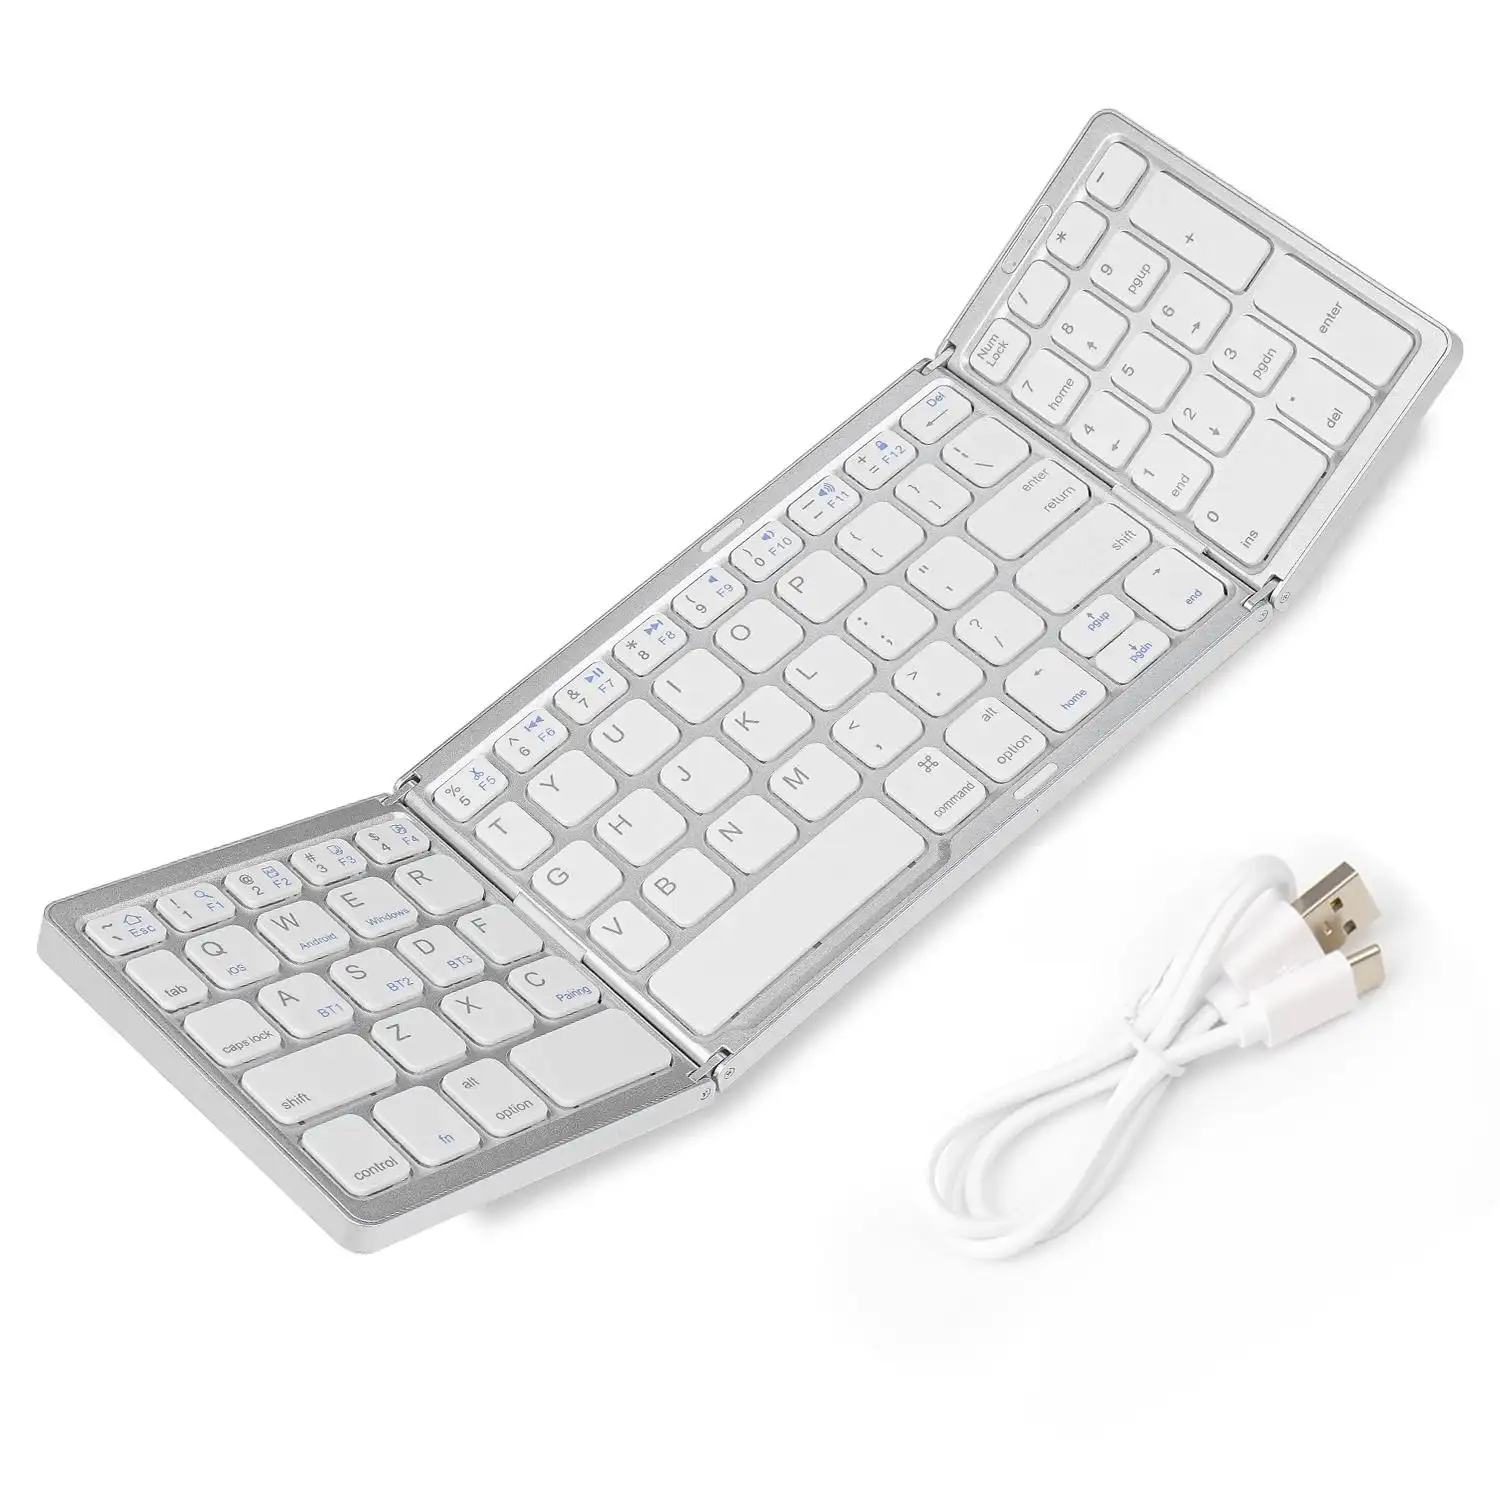 Teclado portátil dobrável para tablet, teclado BT fino e portátil para Mac, Laptop, Windows, Tablet, leve, compatível com Bluetooth